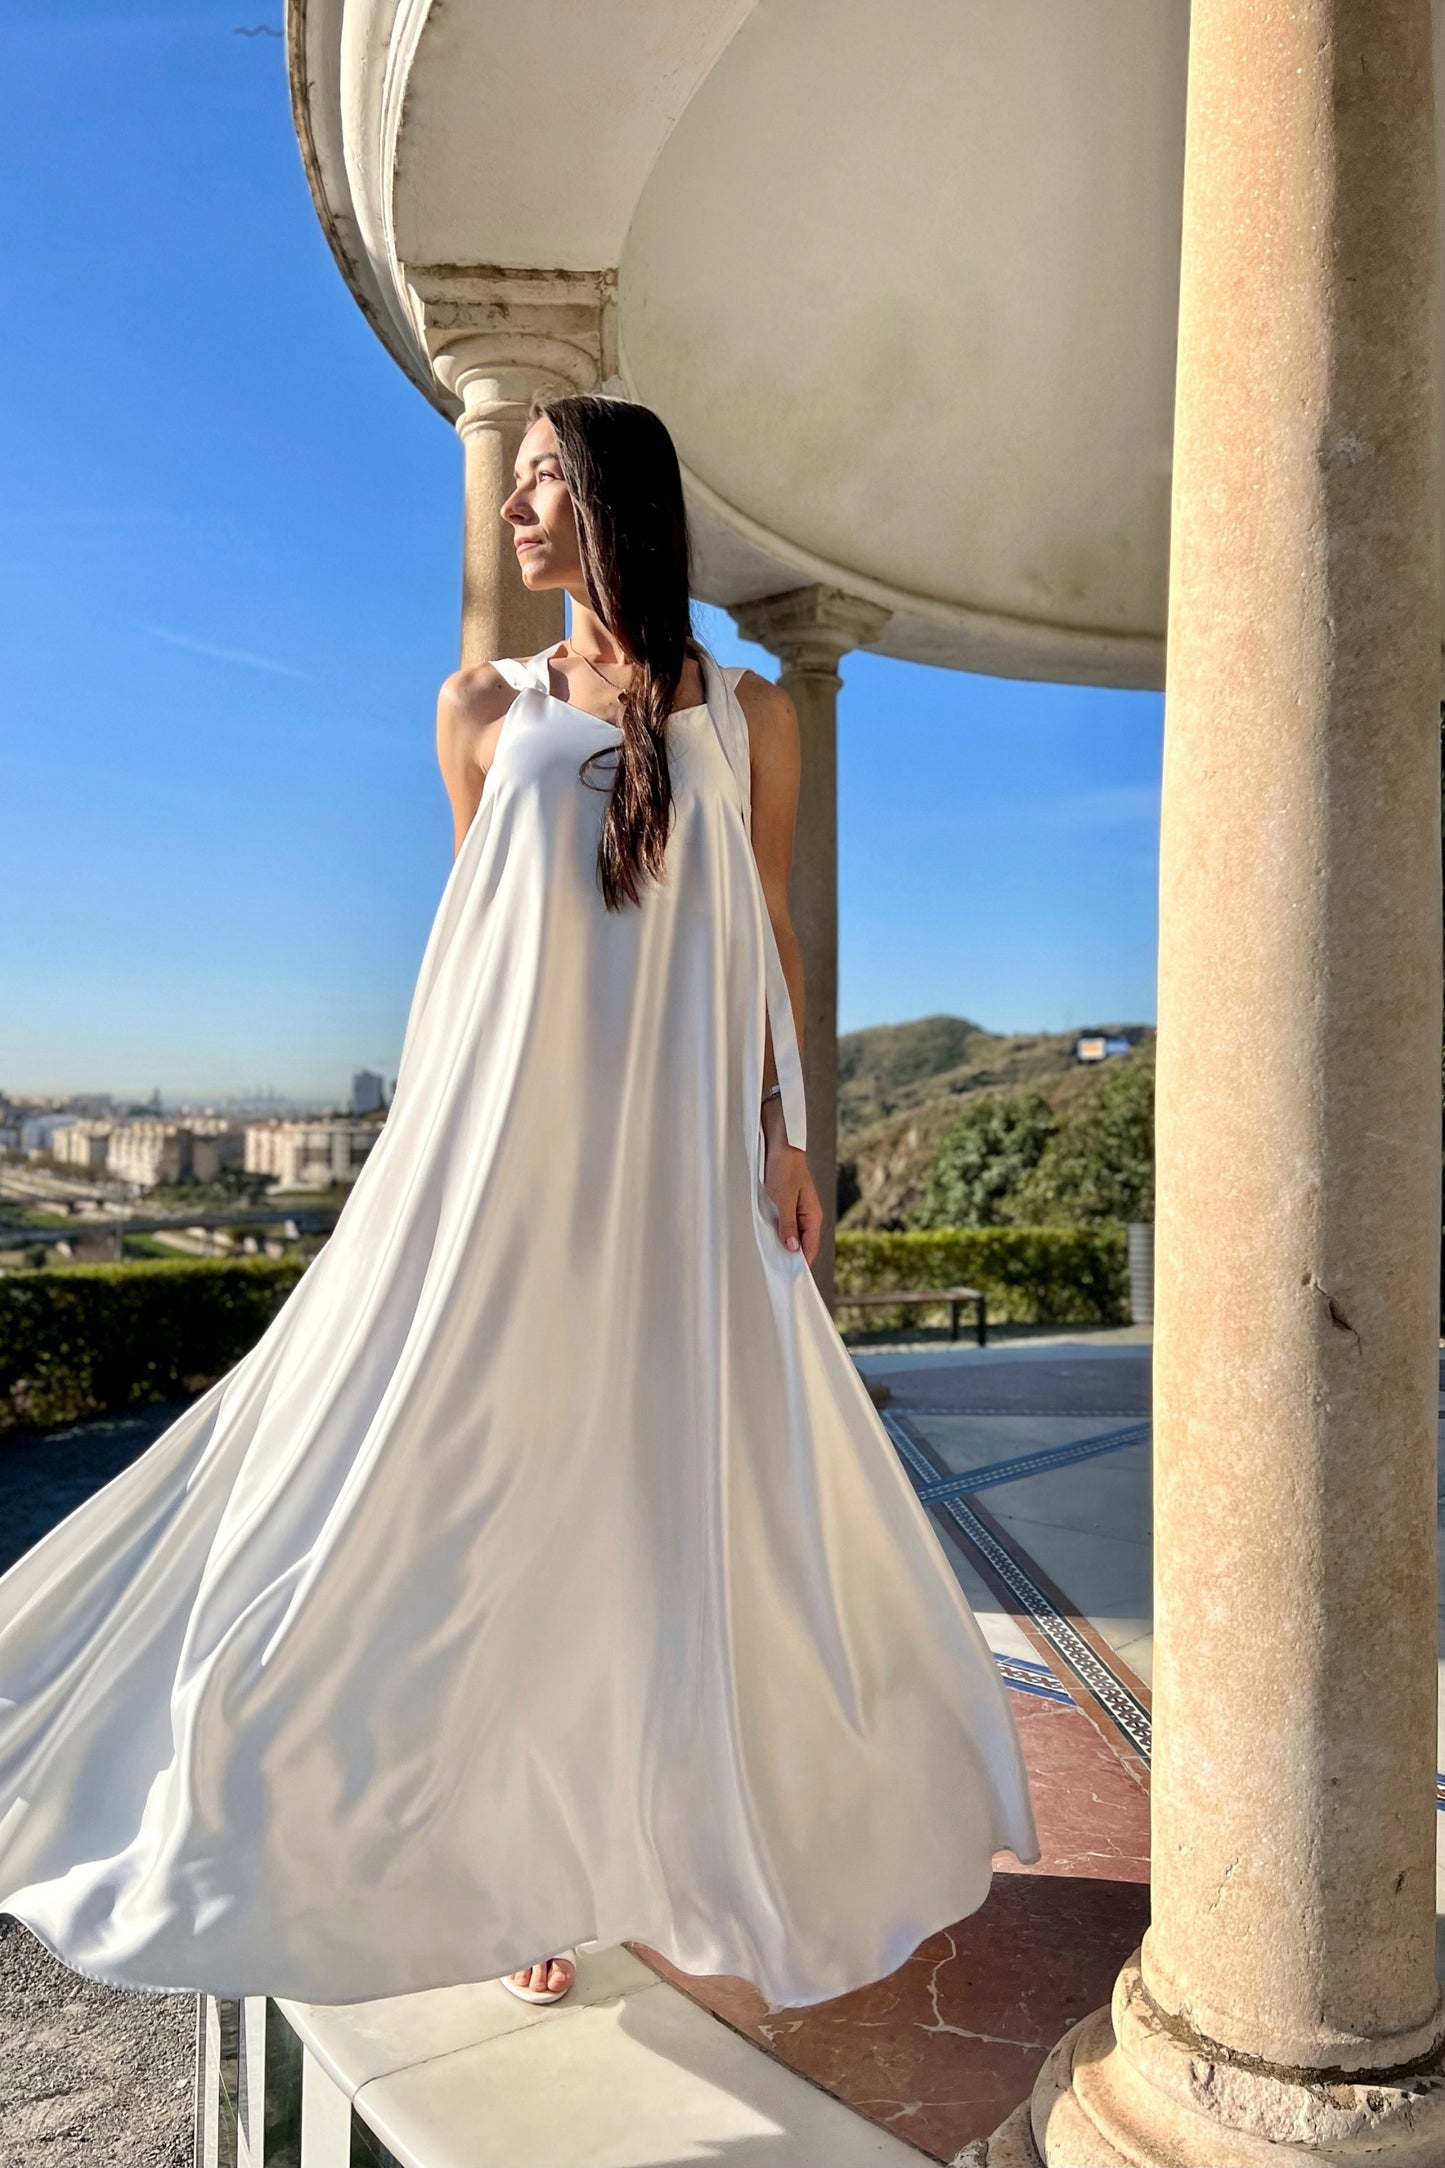 Sleeveless white maxi dress with open back